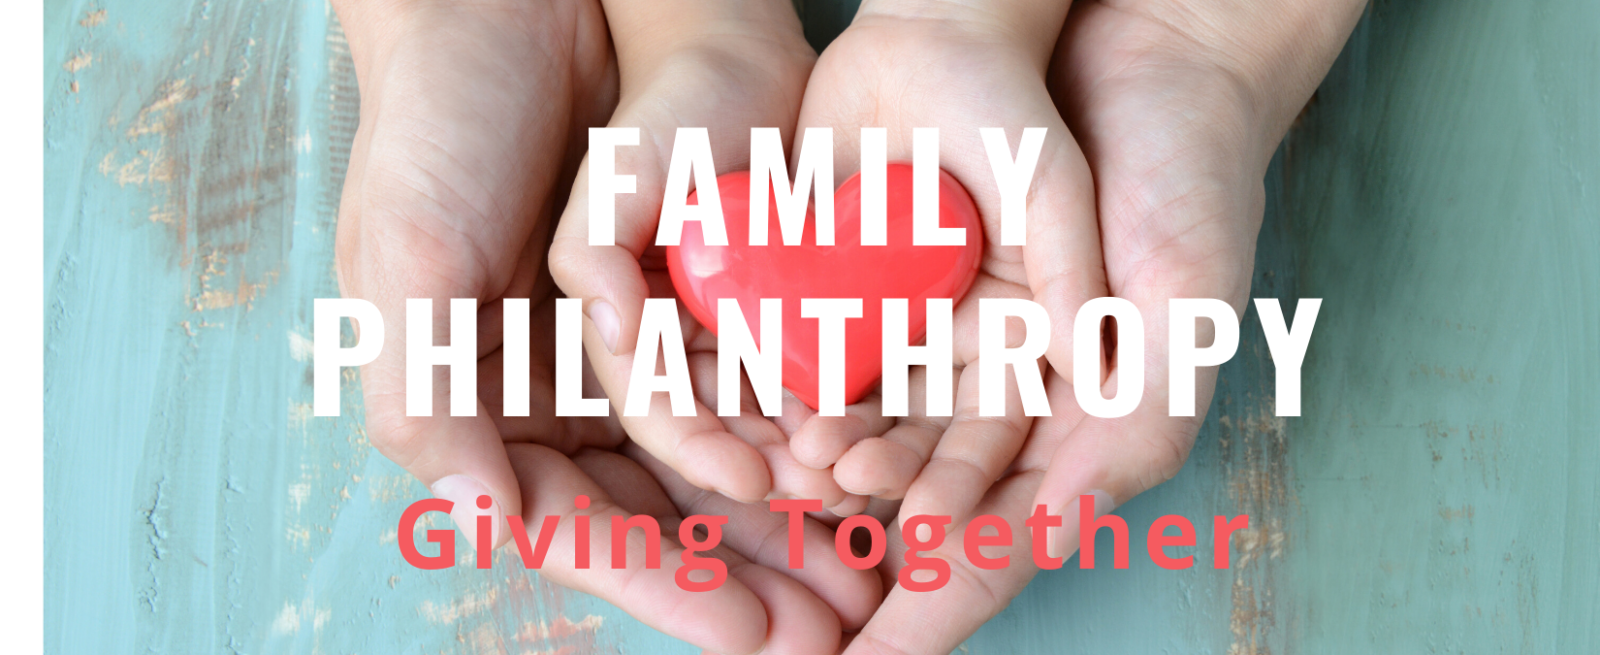 Family Philanthropy web pix